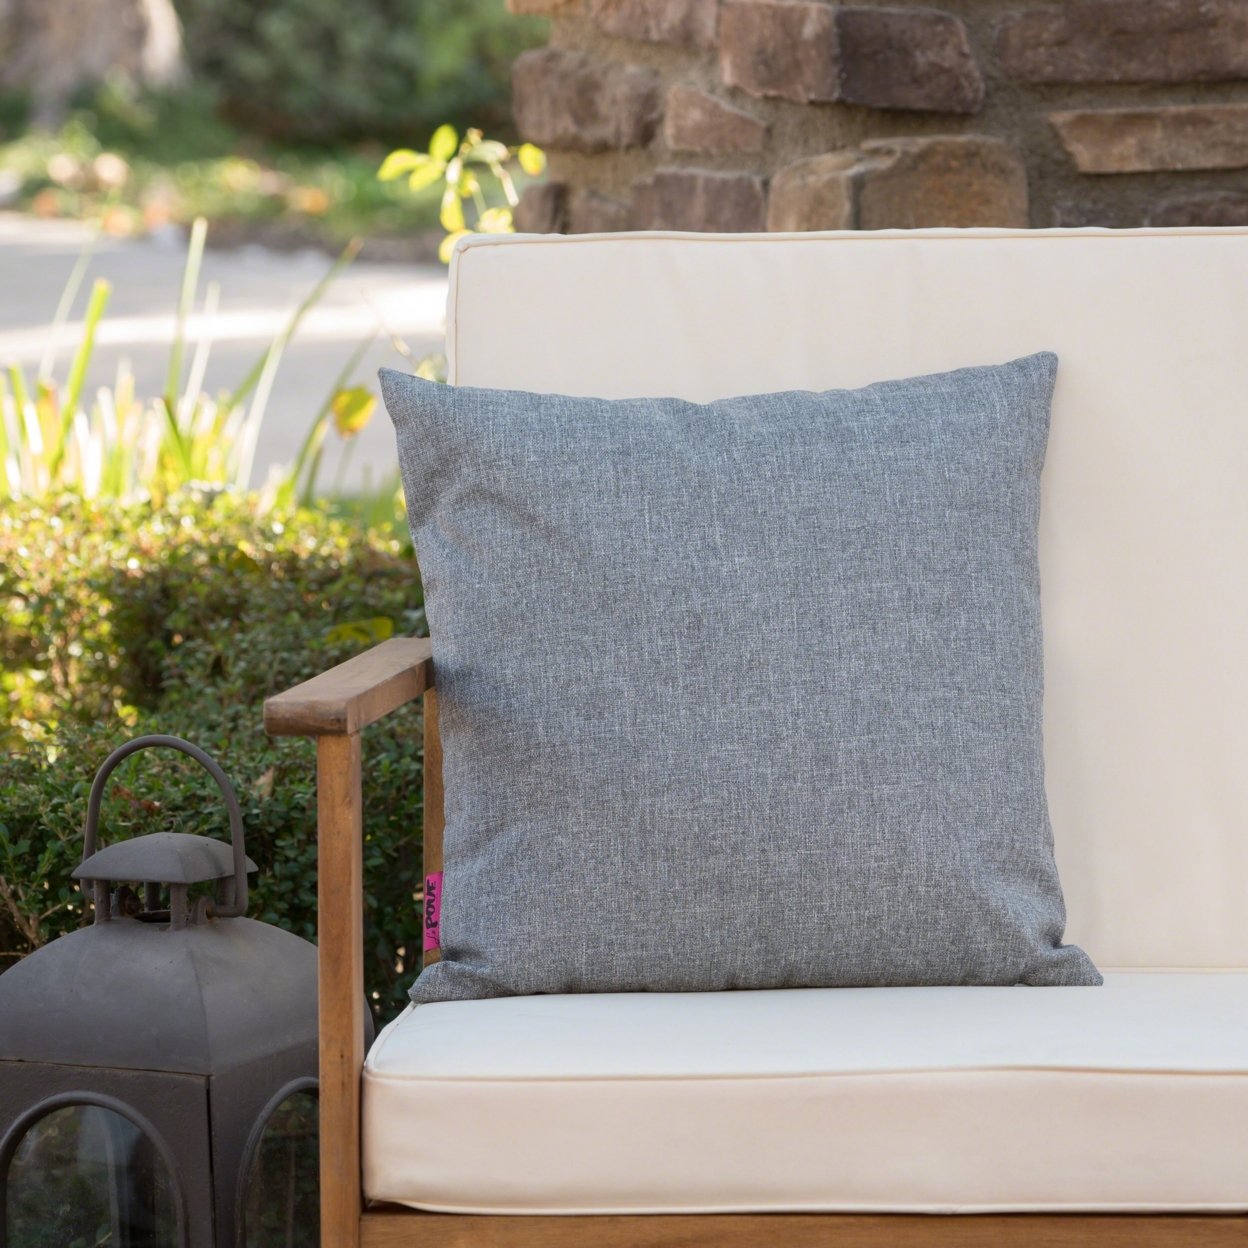 Coronado Outdoor Water Resistant Square Throw Pillow - Teal, Set Of 2